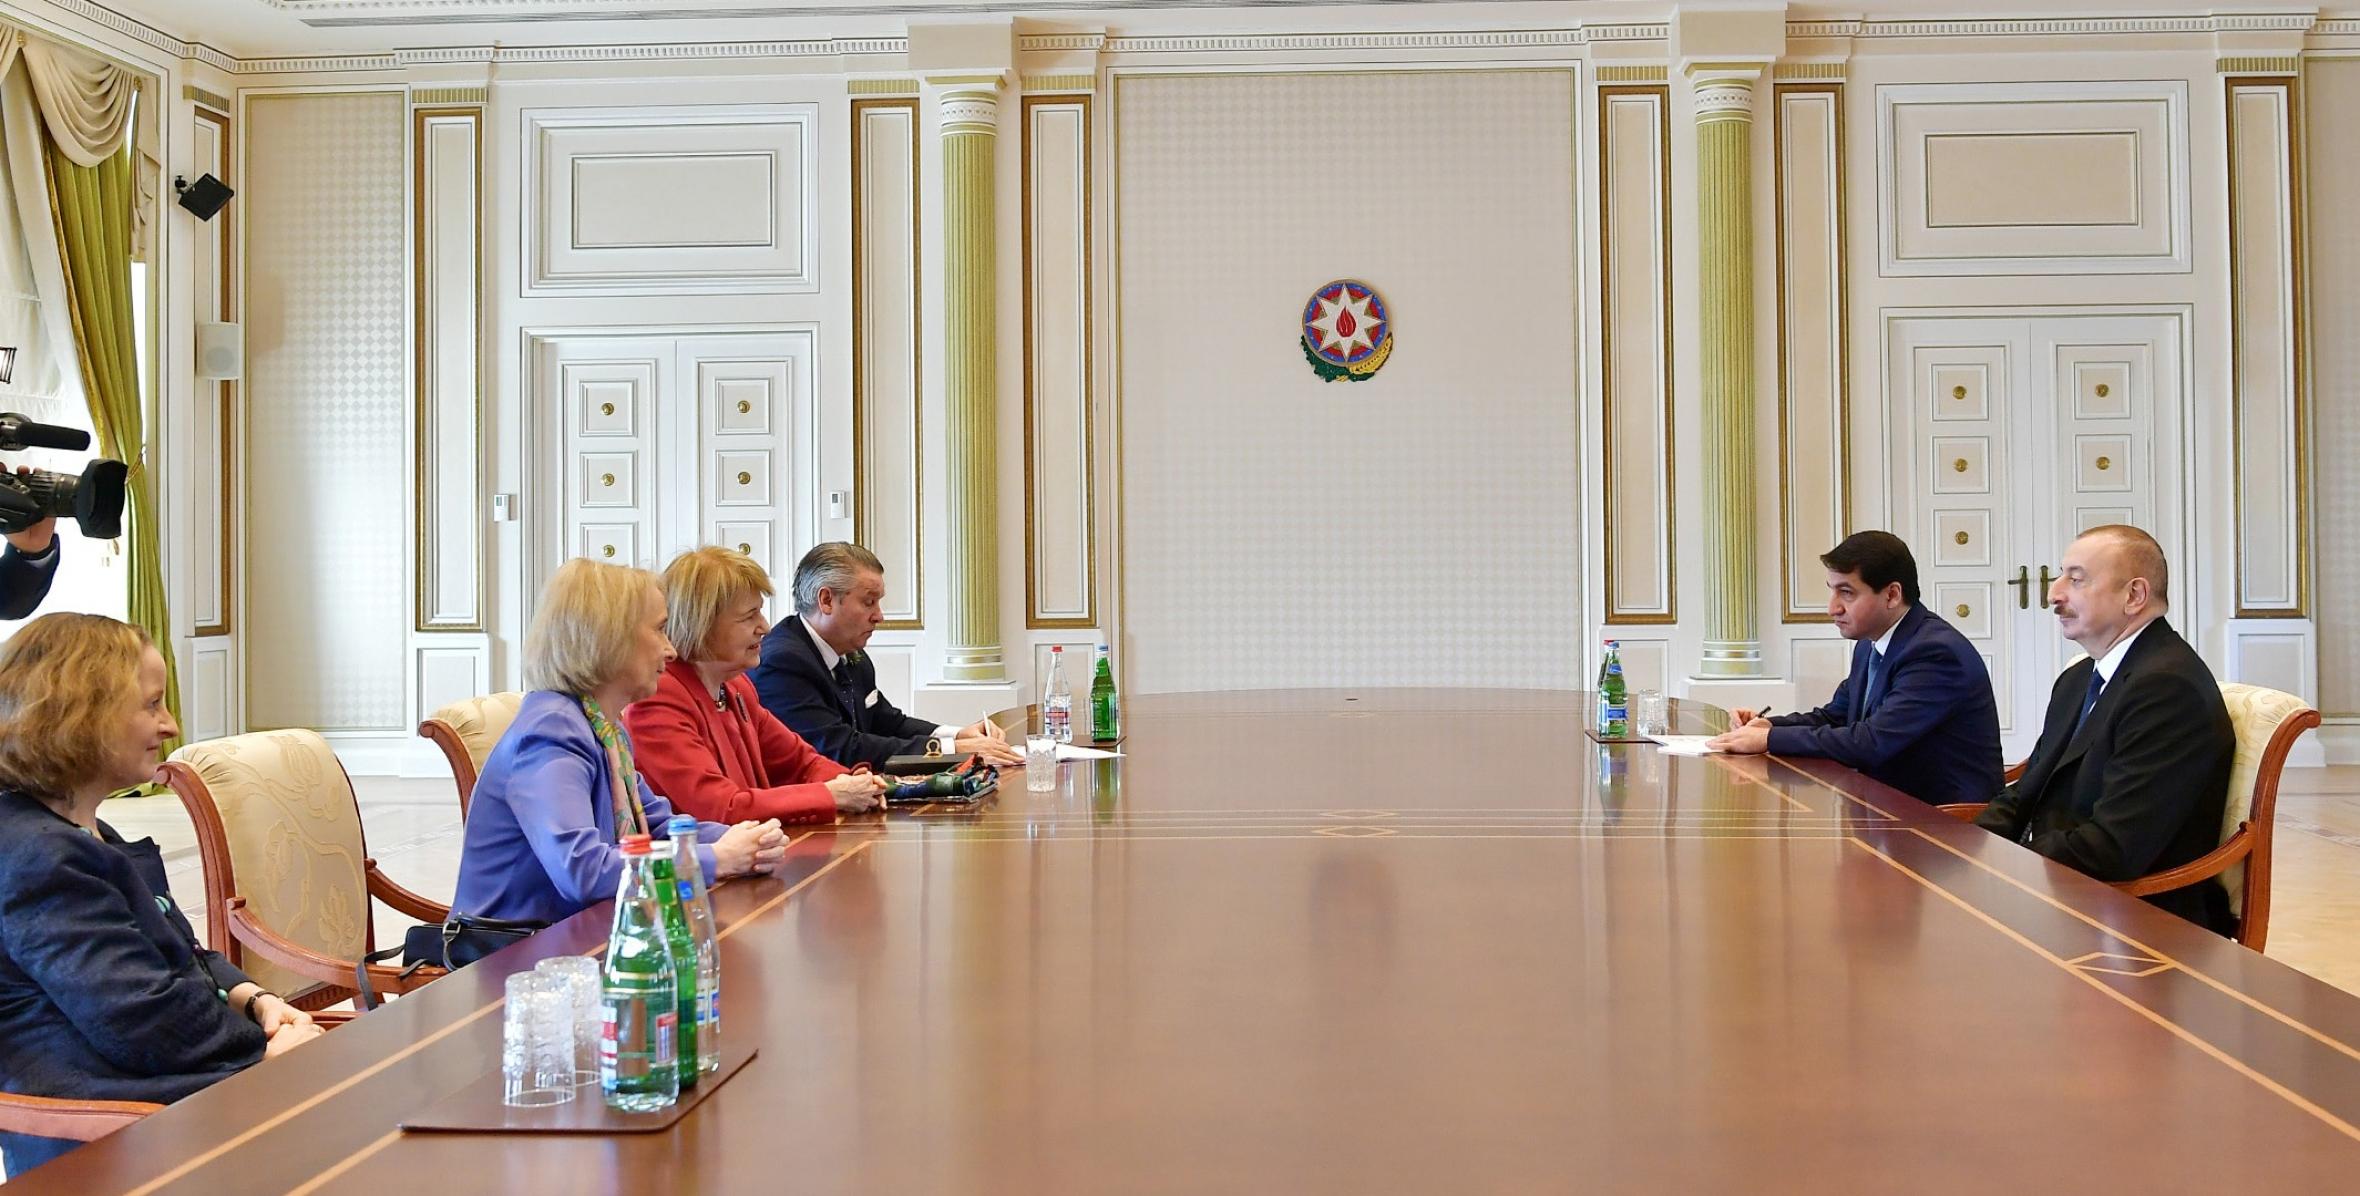 Ilham Aliyev received UK Prime Minister's Trade Envoy to Azerbaijan